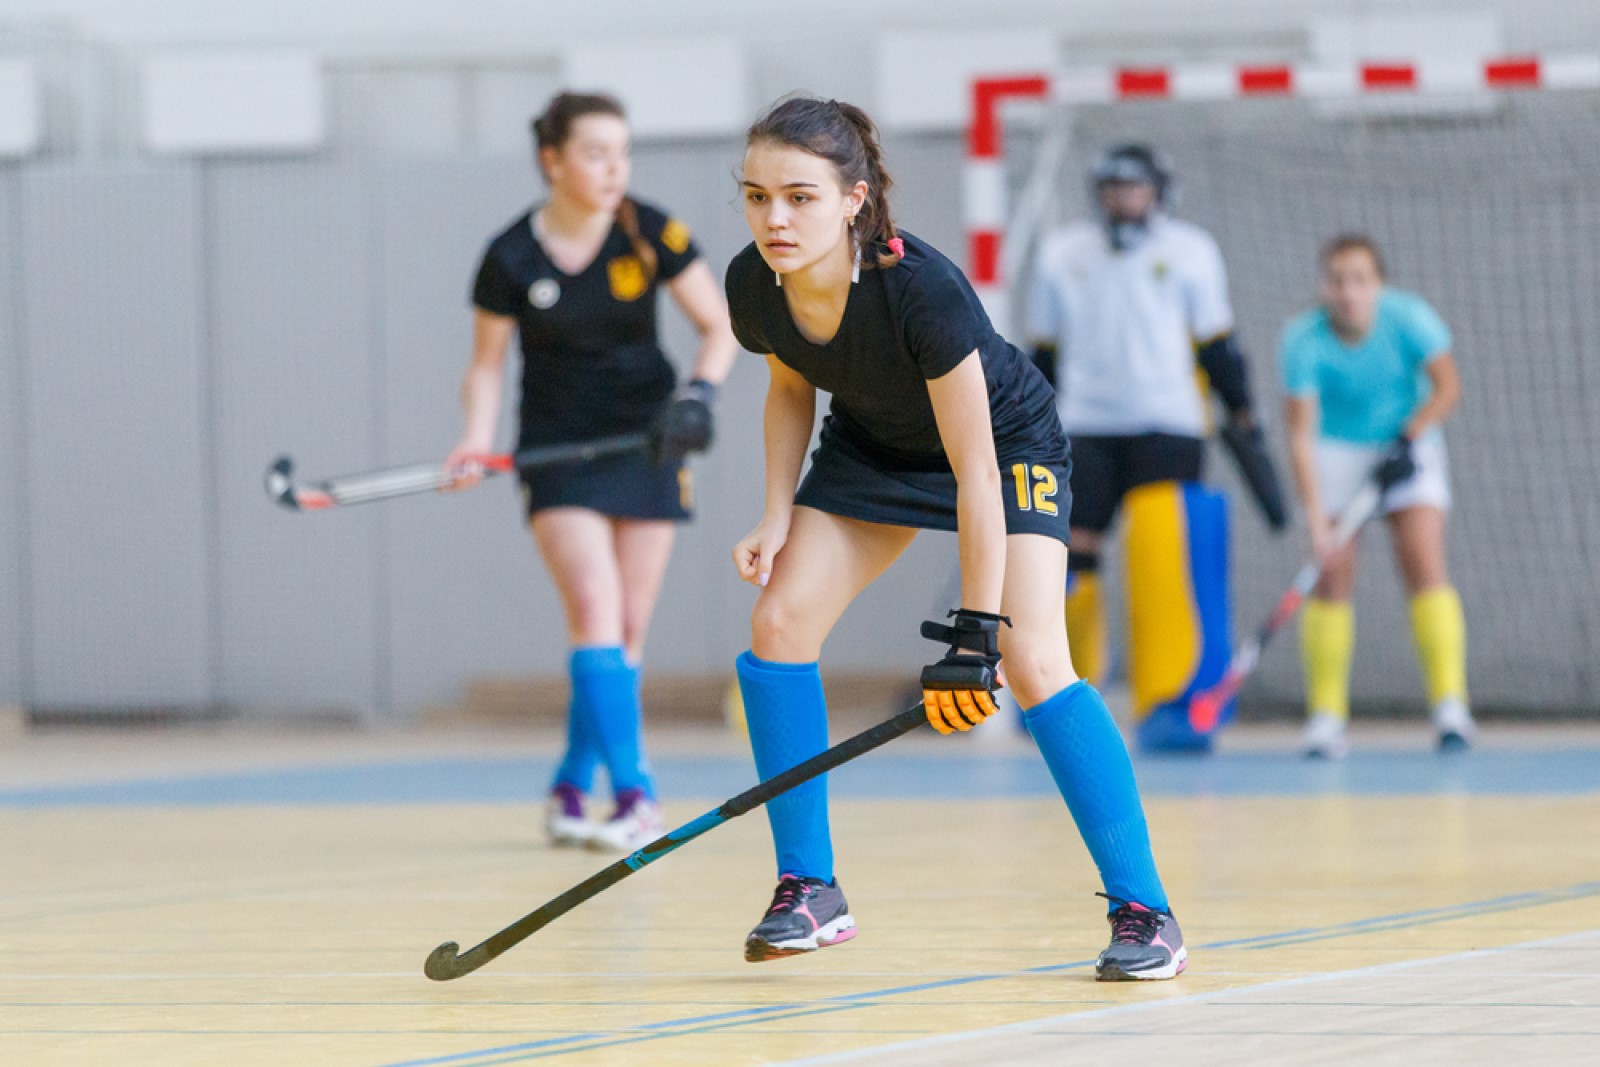 female hockey player on indoor court.jpg